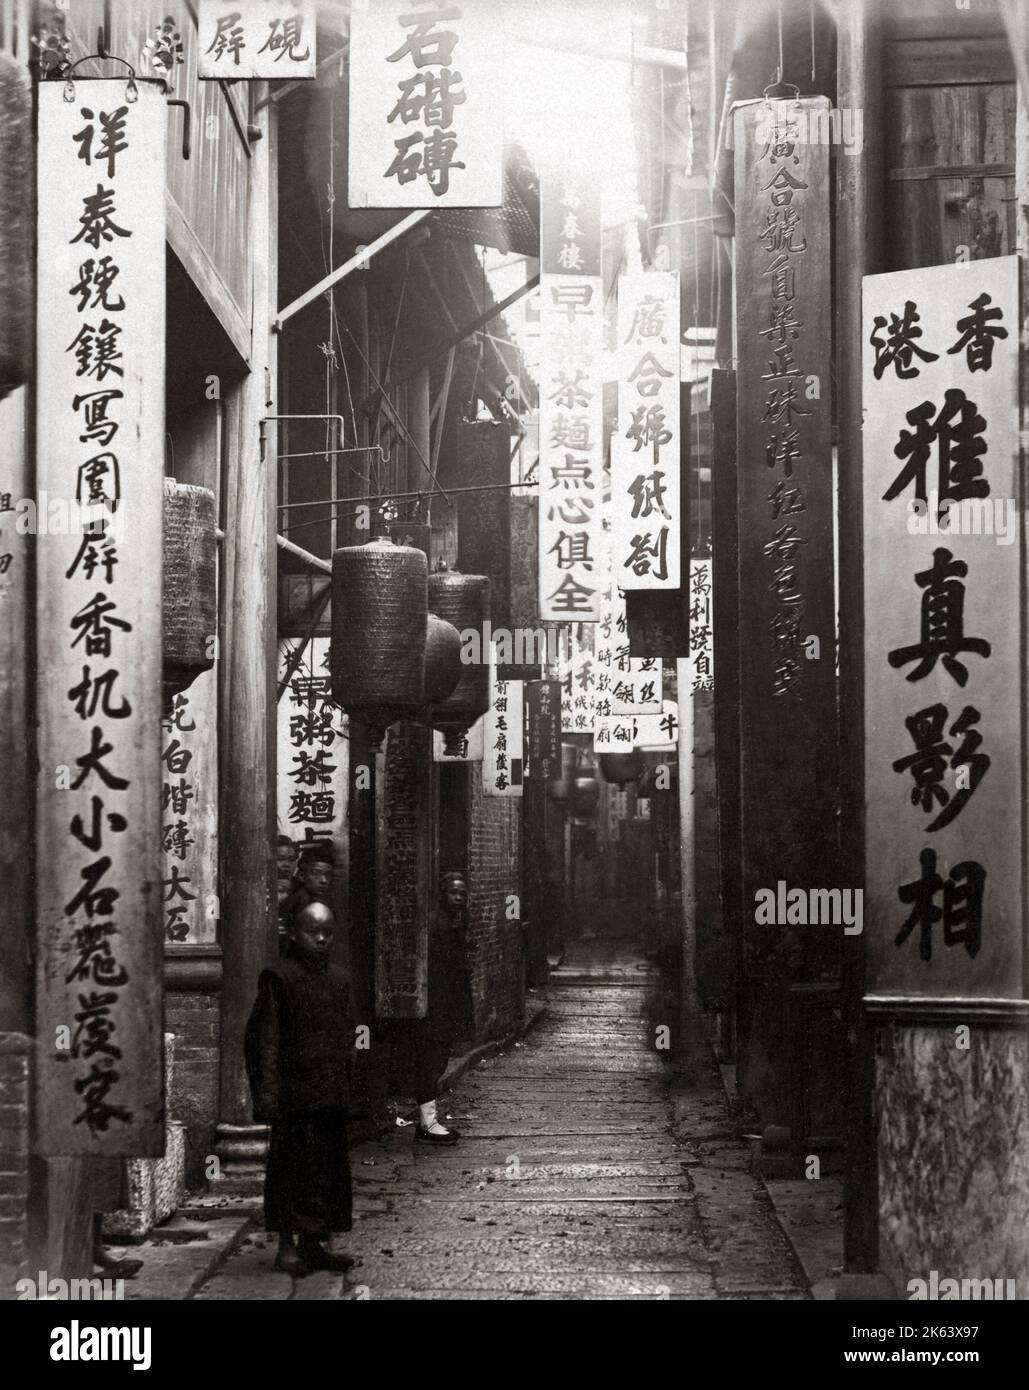 Himmlischen Frieden Street, Kanton (Guangzhou), China, ca. 1880 s.     Datum: ca. 1880 s Stockfoto